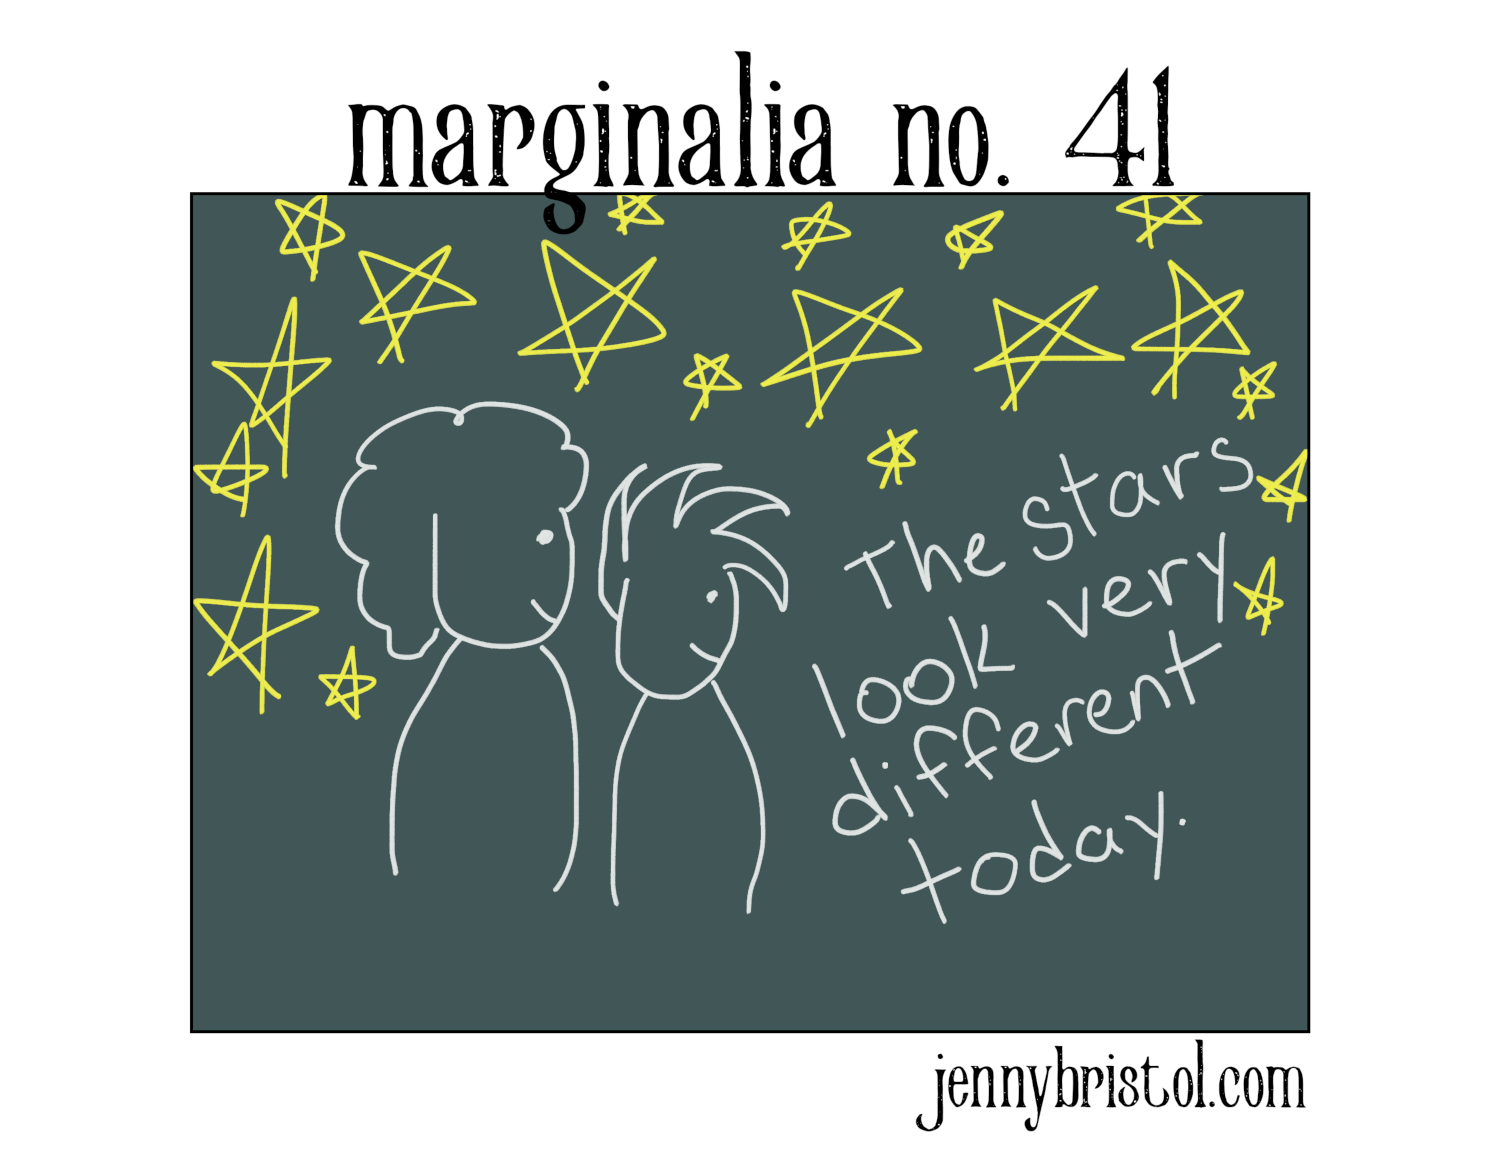 Marginalia no. 41 to post